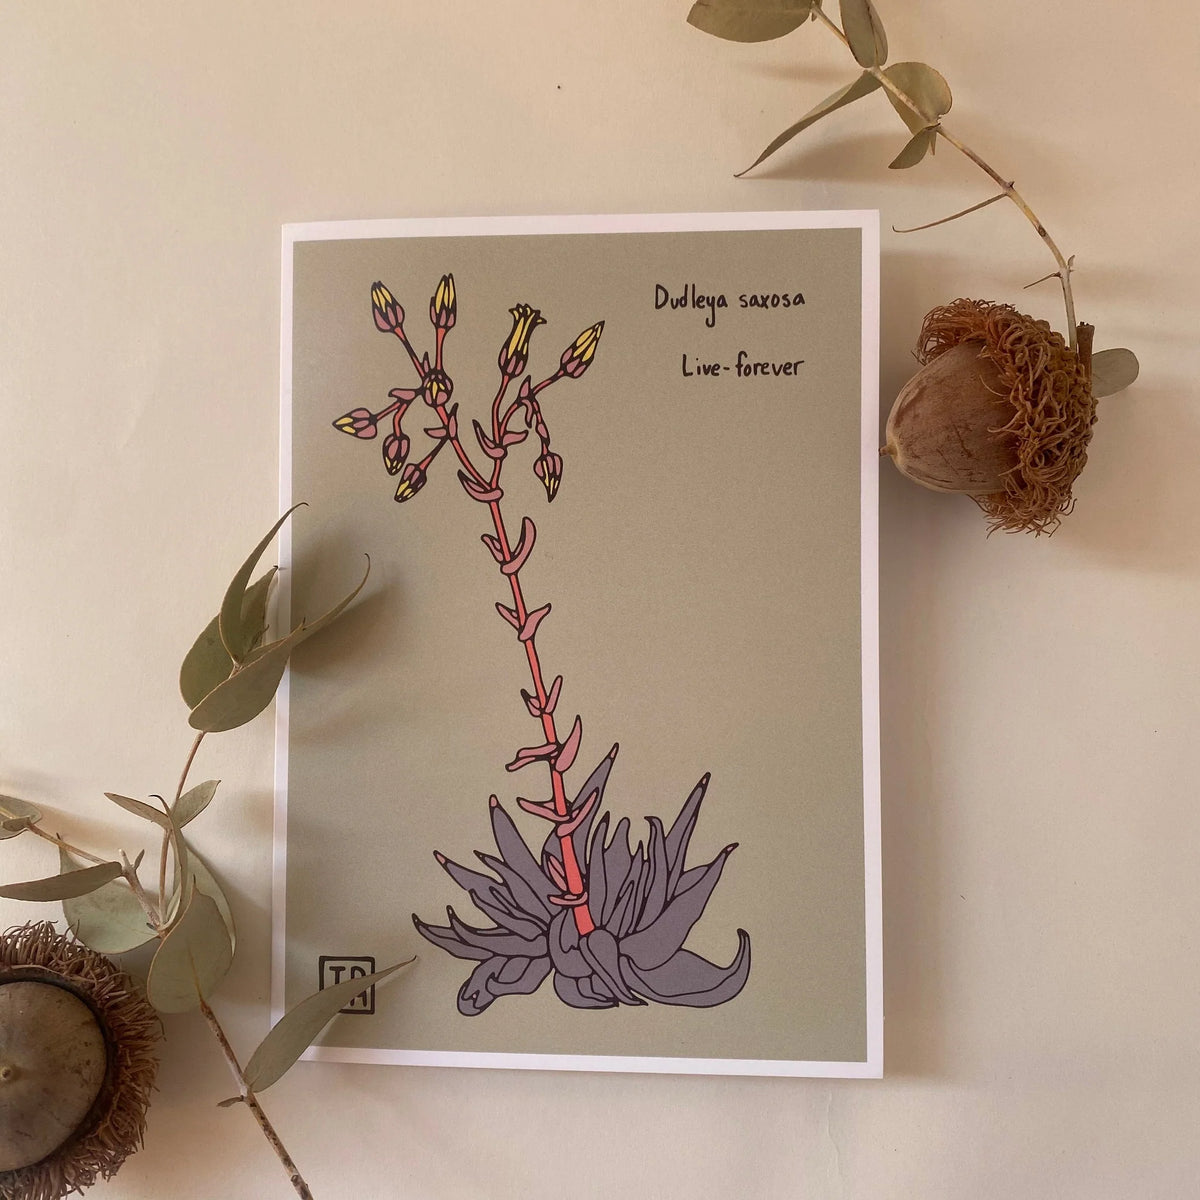 Sonoran Witch Boy Greeting Card